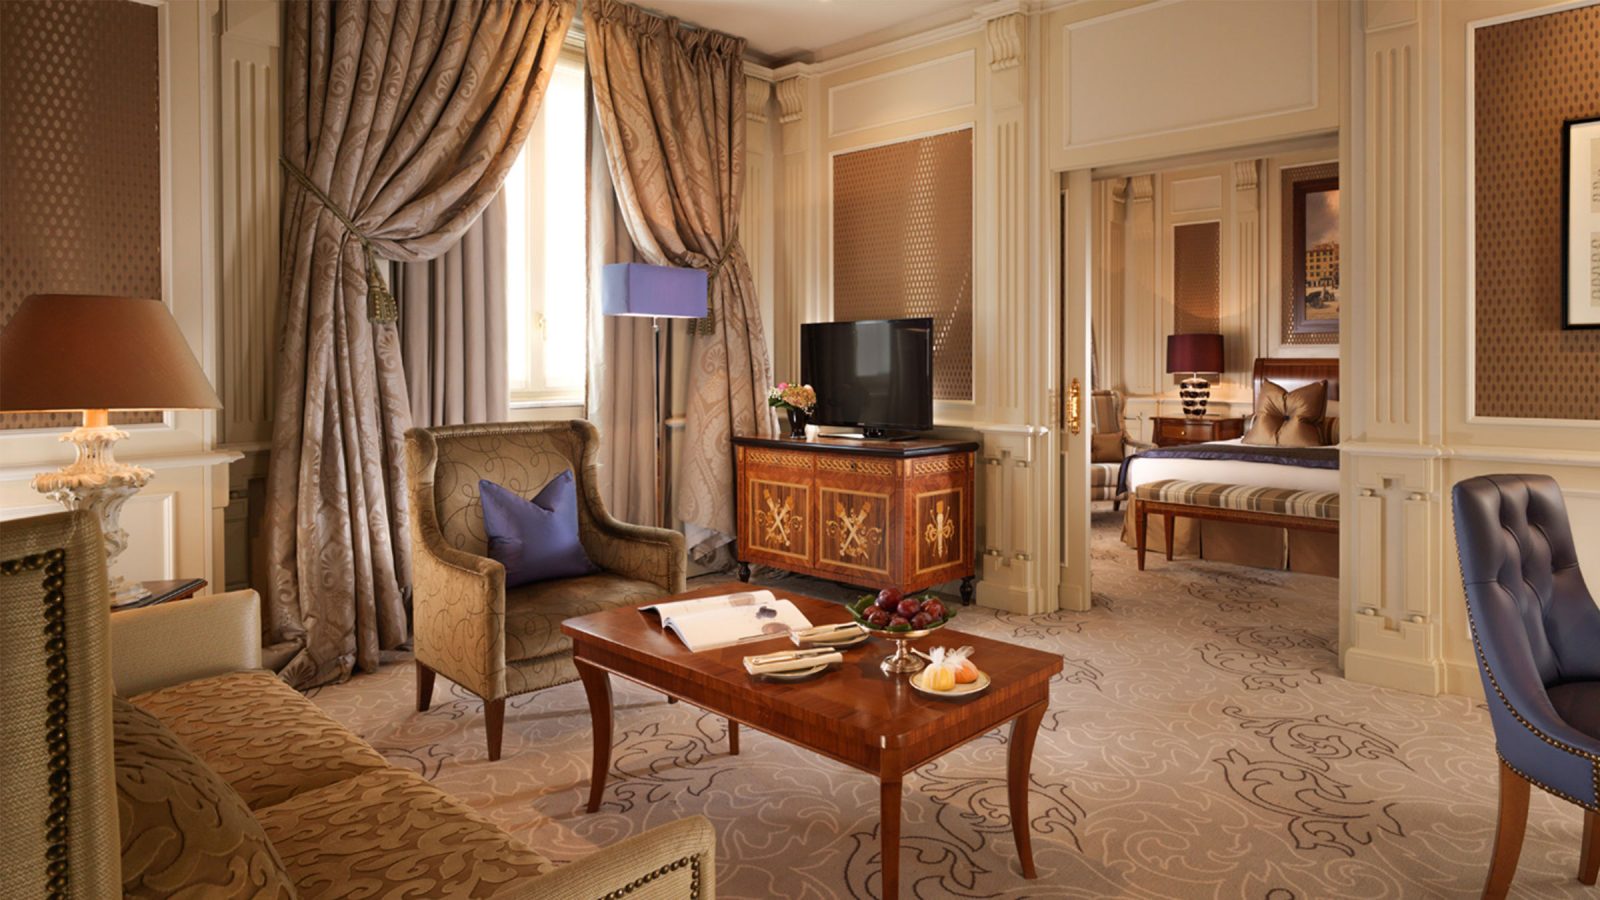 Ambassador Suite - Hotel Principe di Savoia, Milan